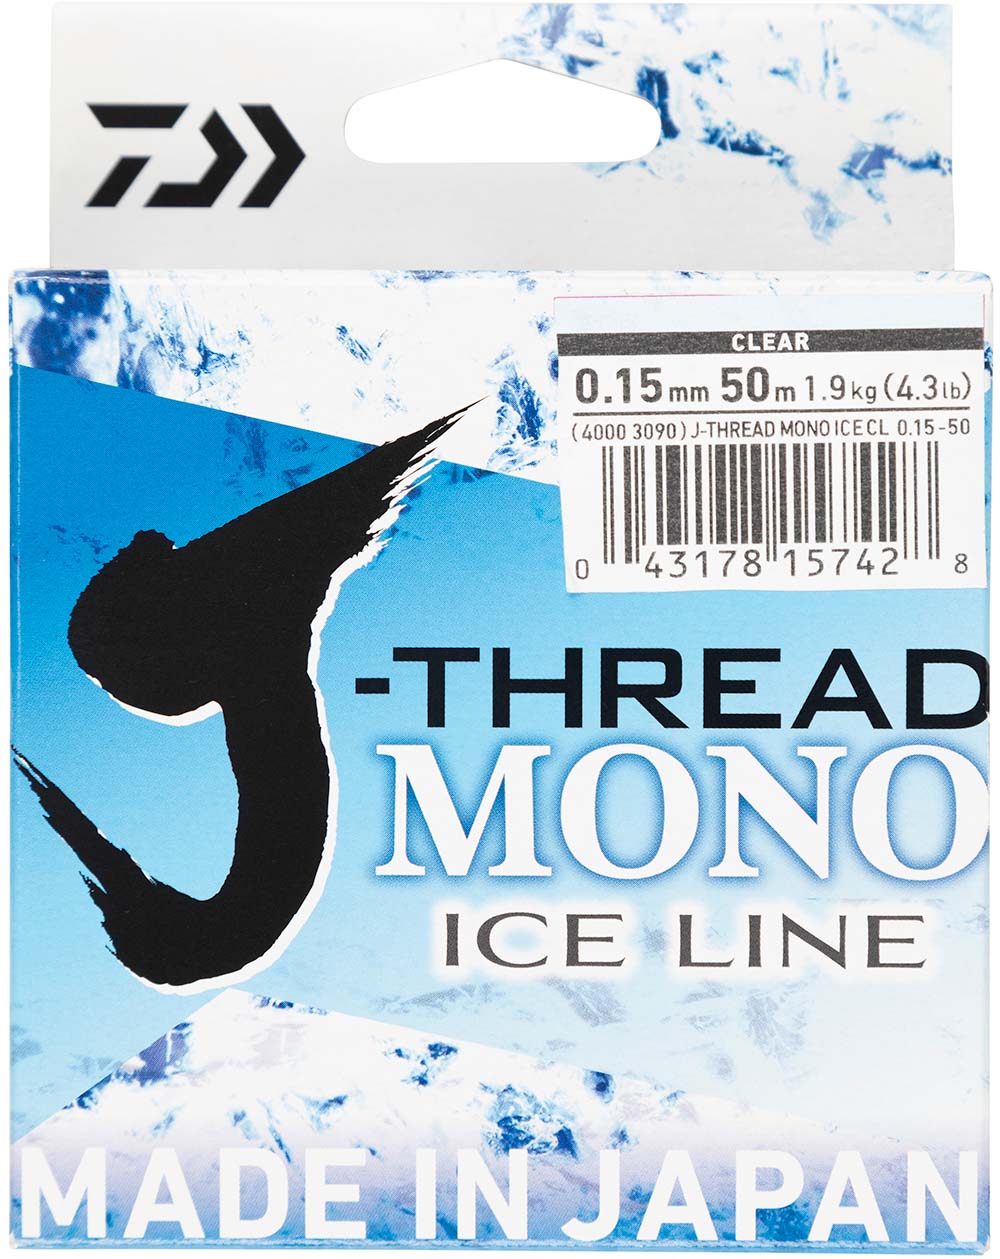 Айс лайн. Леска Daiwa. Daiwa j-thread FC Ice line. Леска j-thread mono Ice line в магазине трофей. Леска Daiwa Ades 0,215.